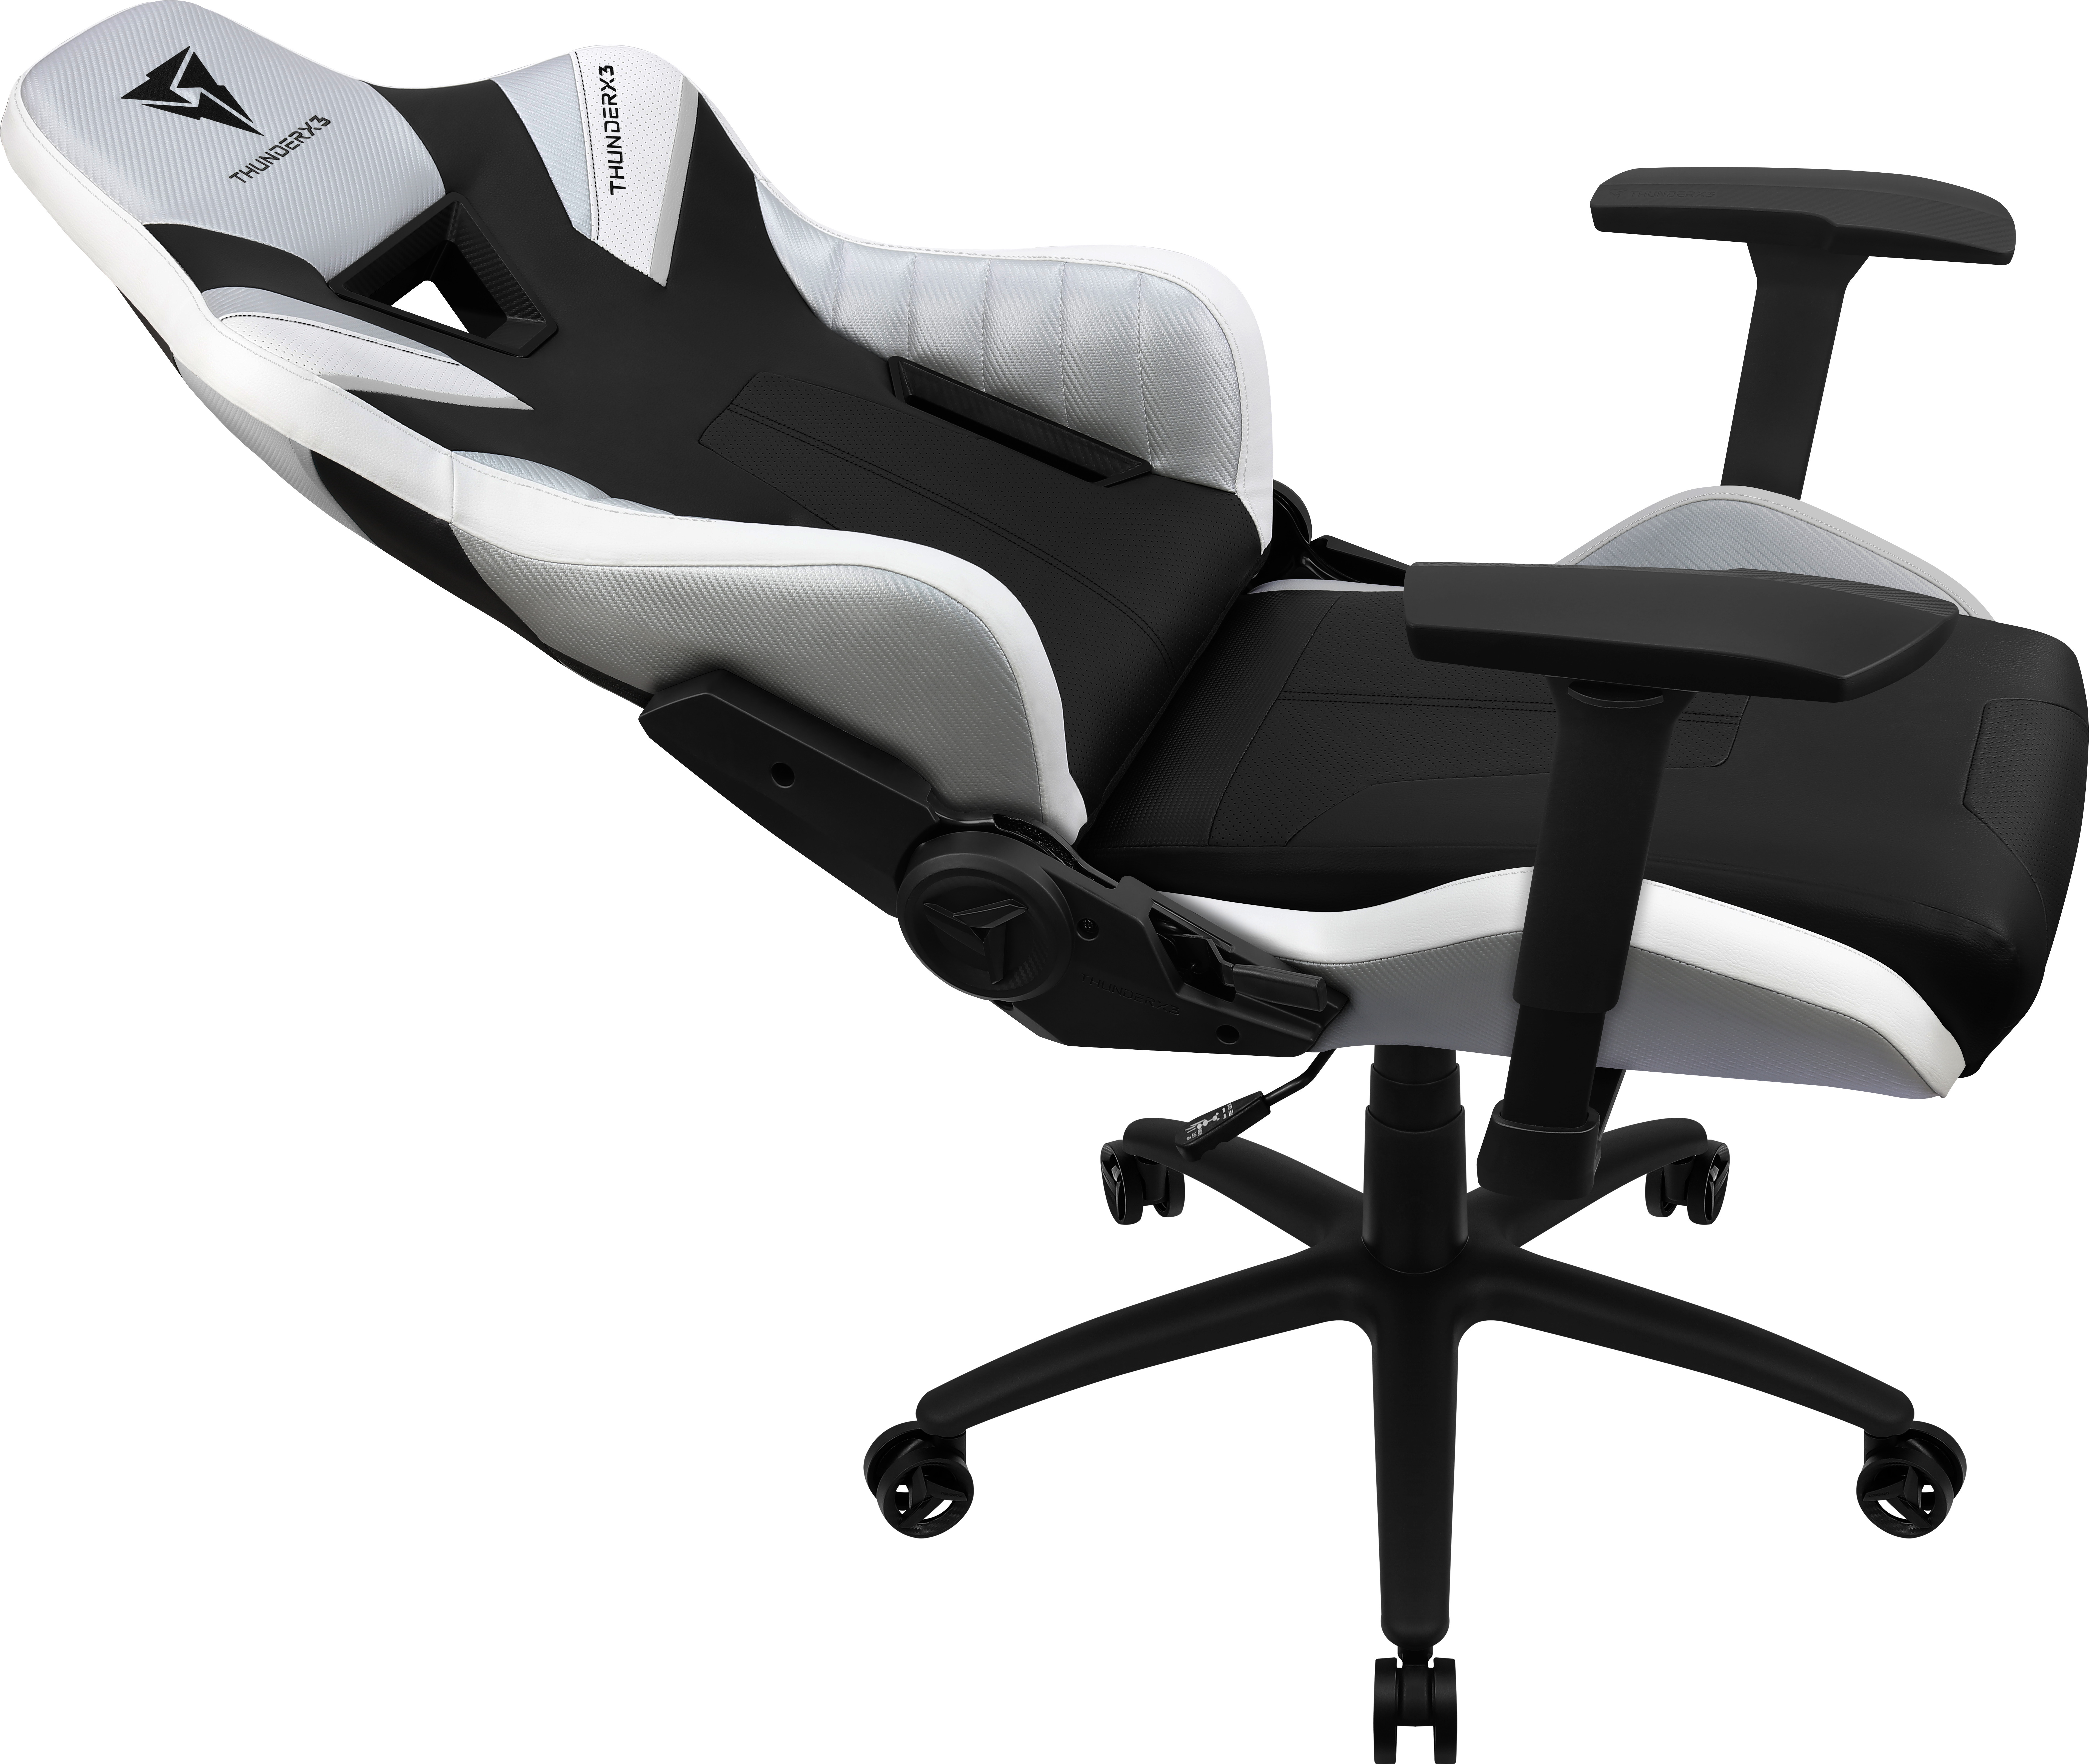 ThunderX3 - Cadeira Gaming ThunderX3 TC5 Preta/Branca (suporta até 150kg)